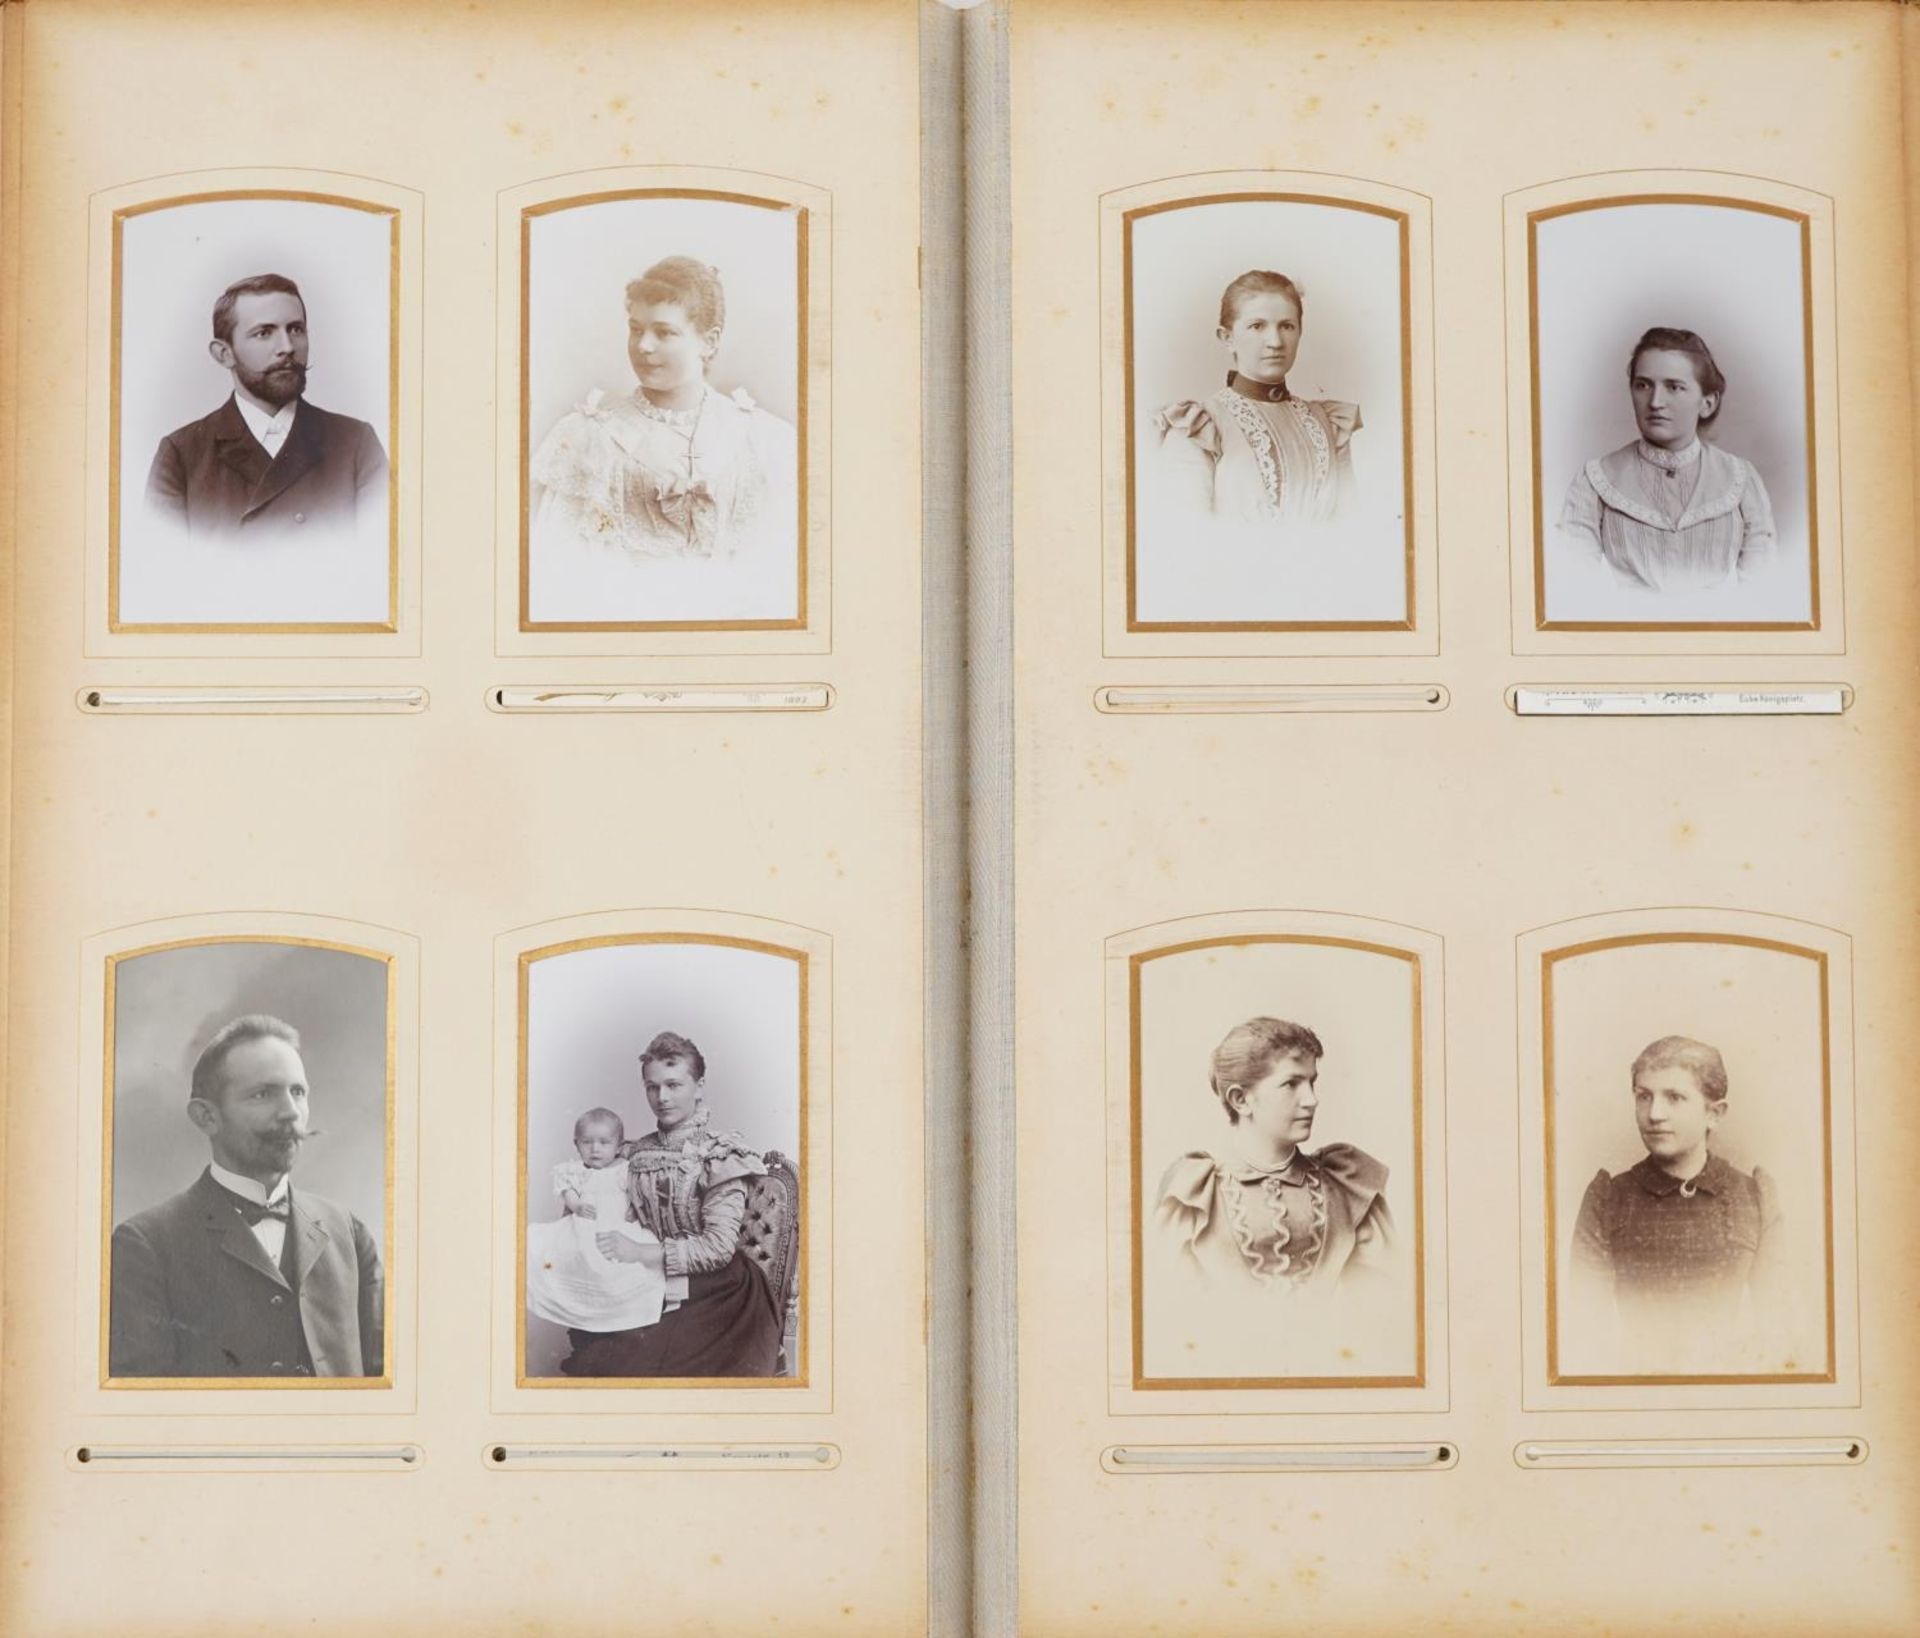 Victorian cabinet cards and cartes de visite photographs arranged in an Art Nouveau leather album - Image 3 of 6